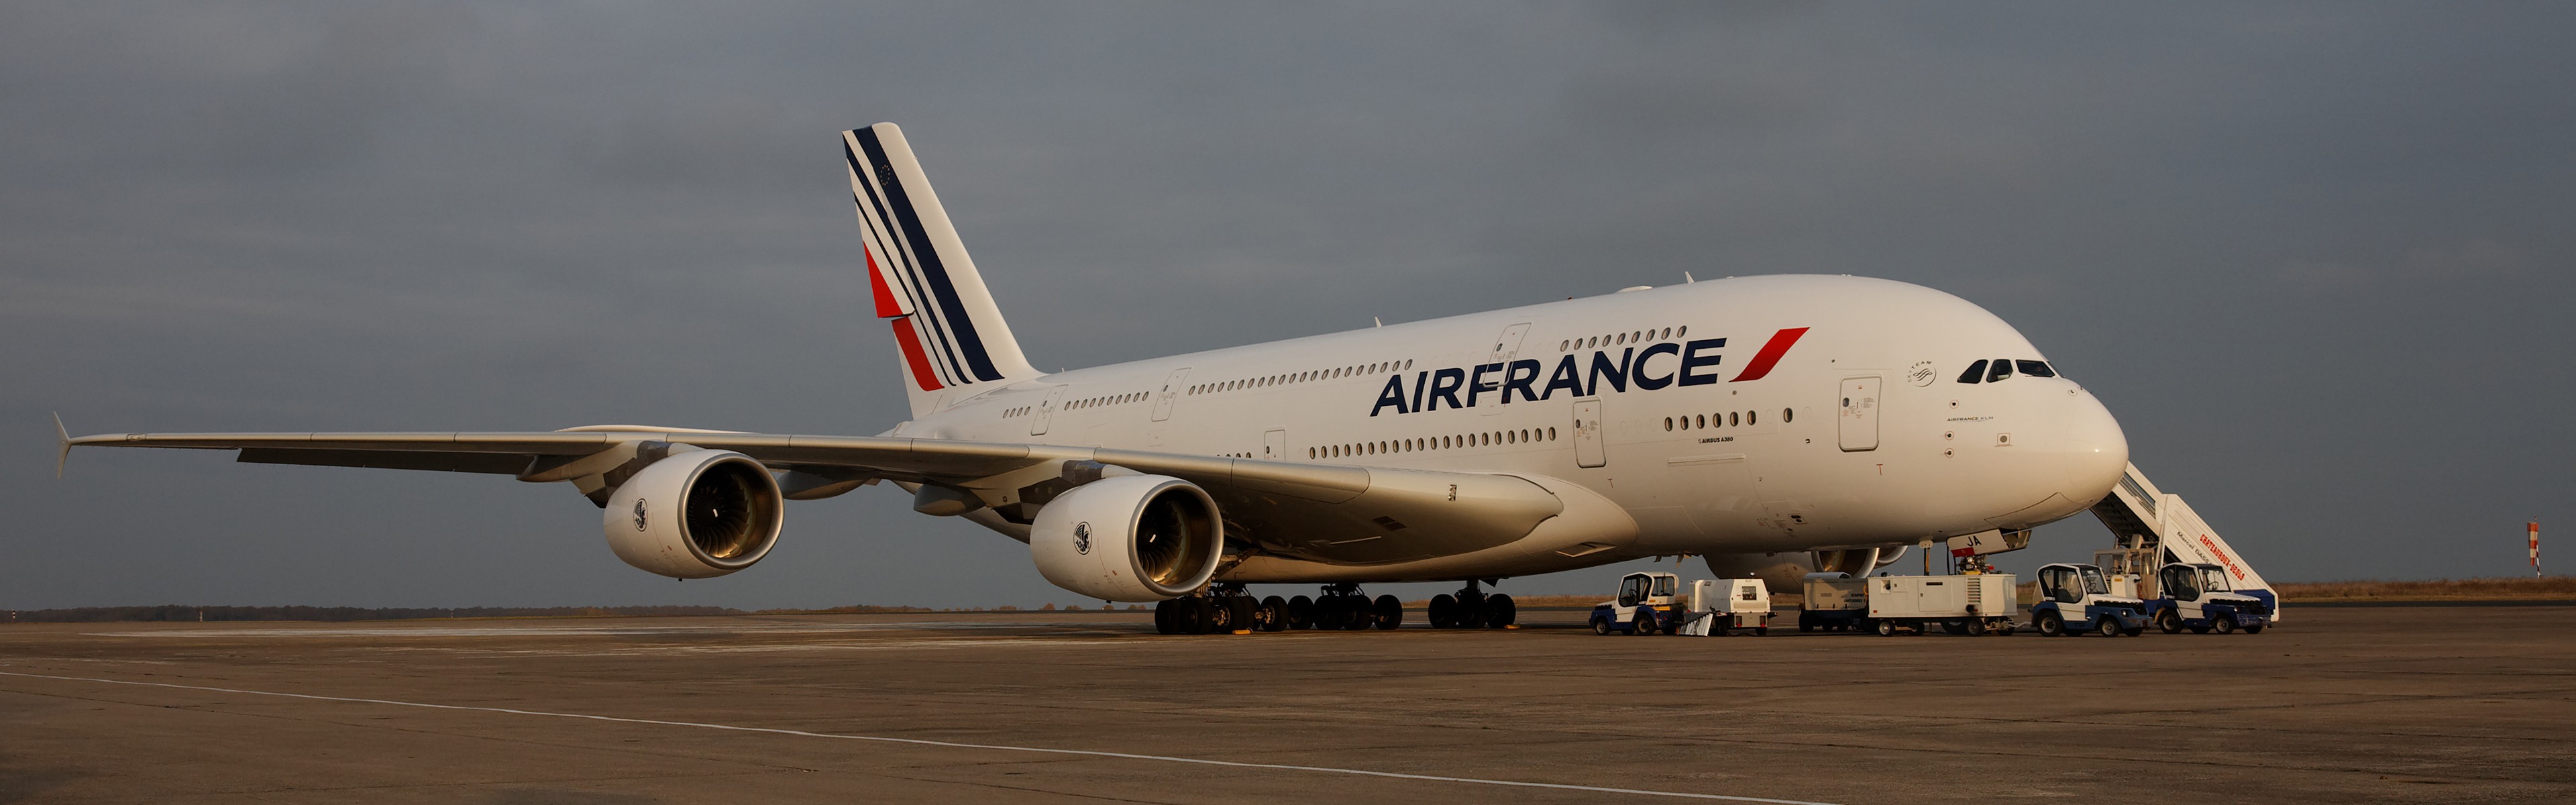 Air France Airbus A 380 861 A380 Airbus Airplane Aircraft Dual Monitors Multiple Display 3840x1200